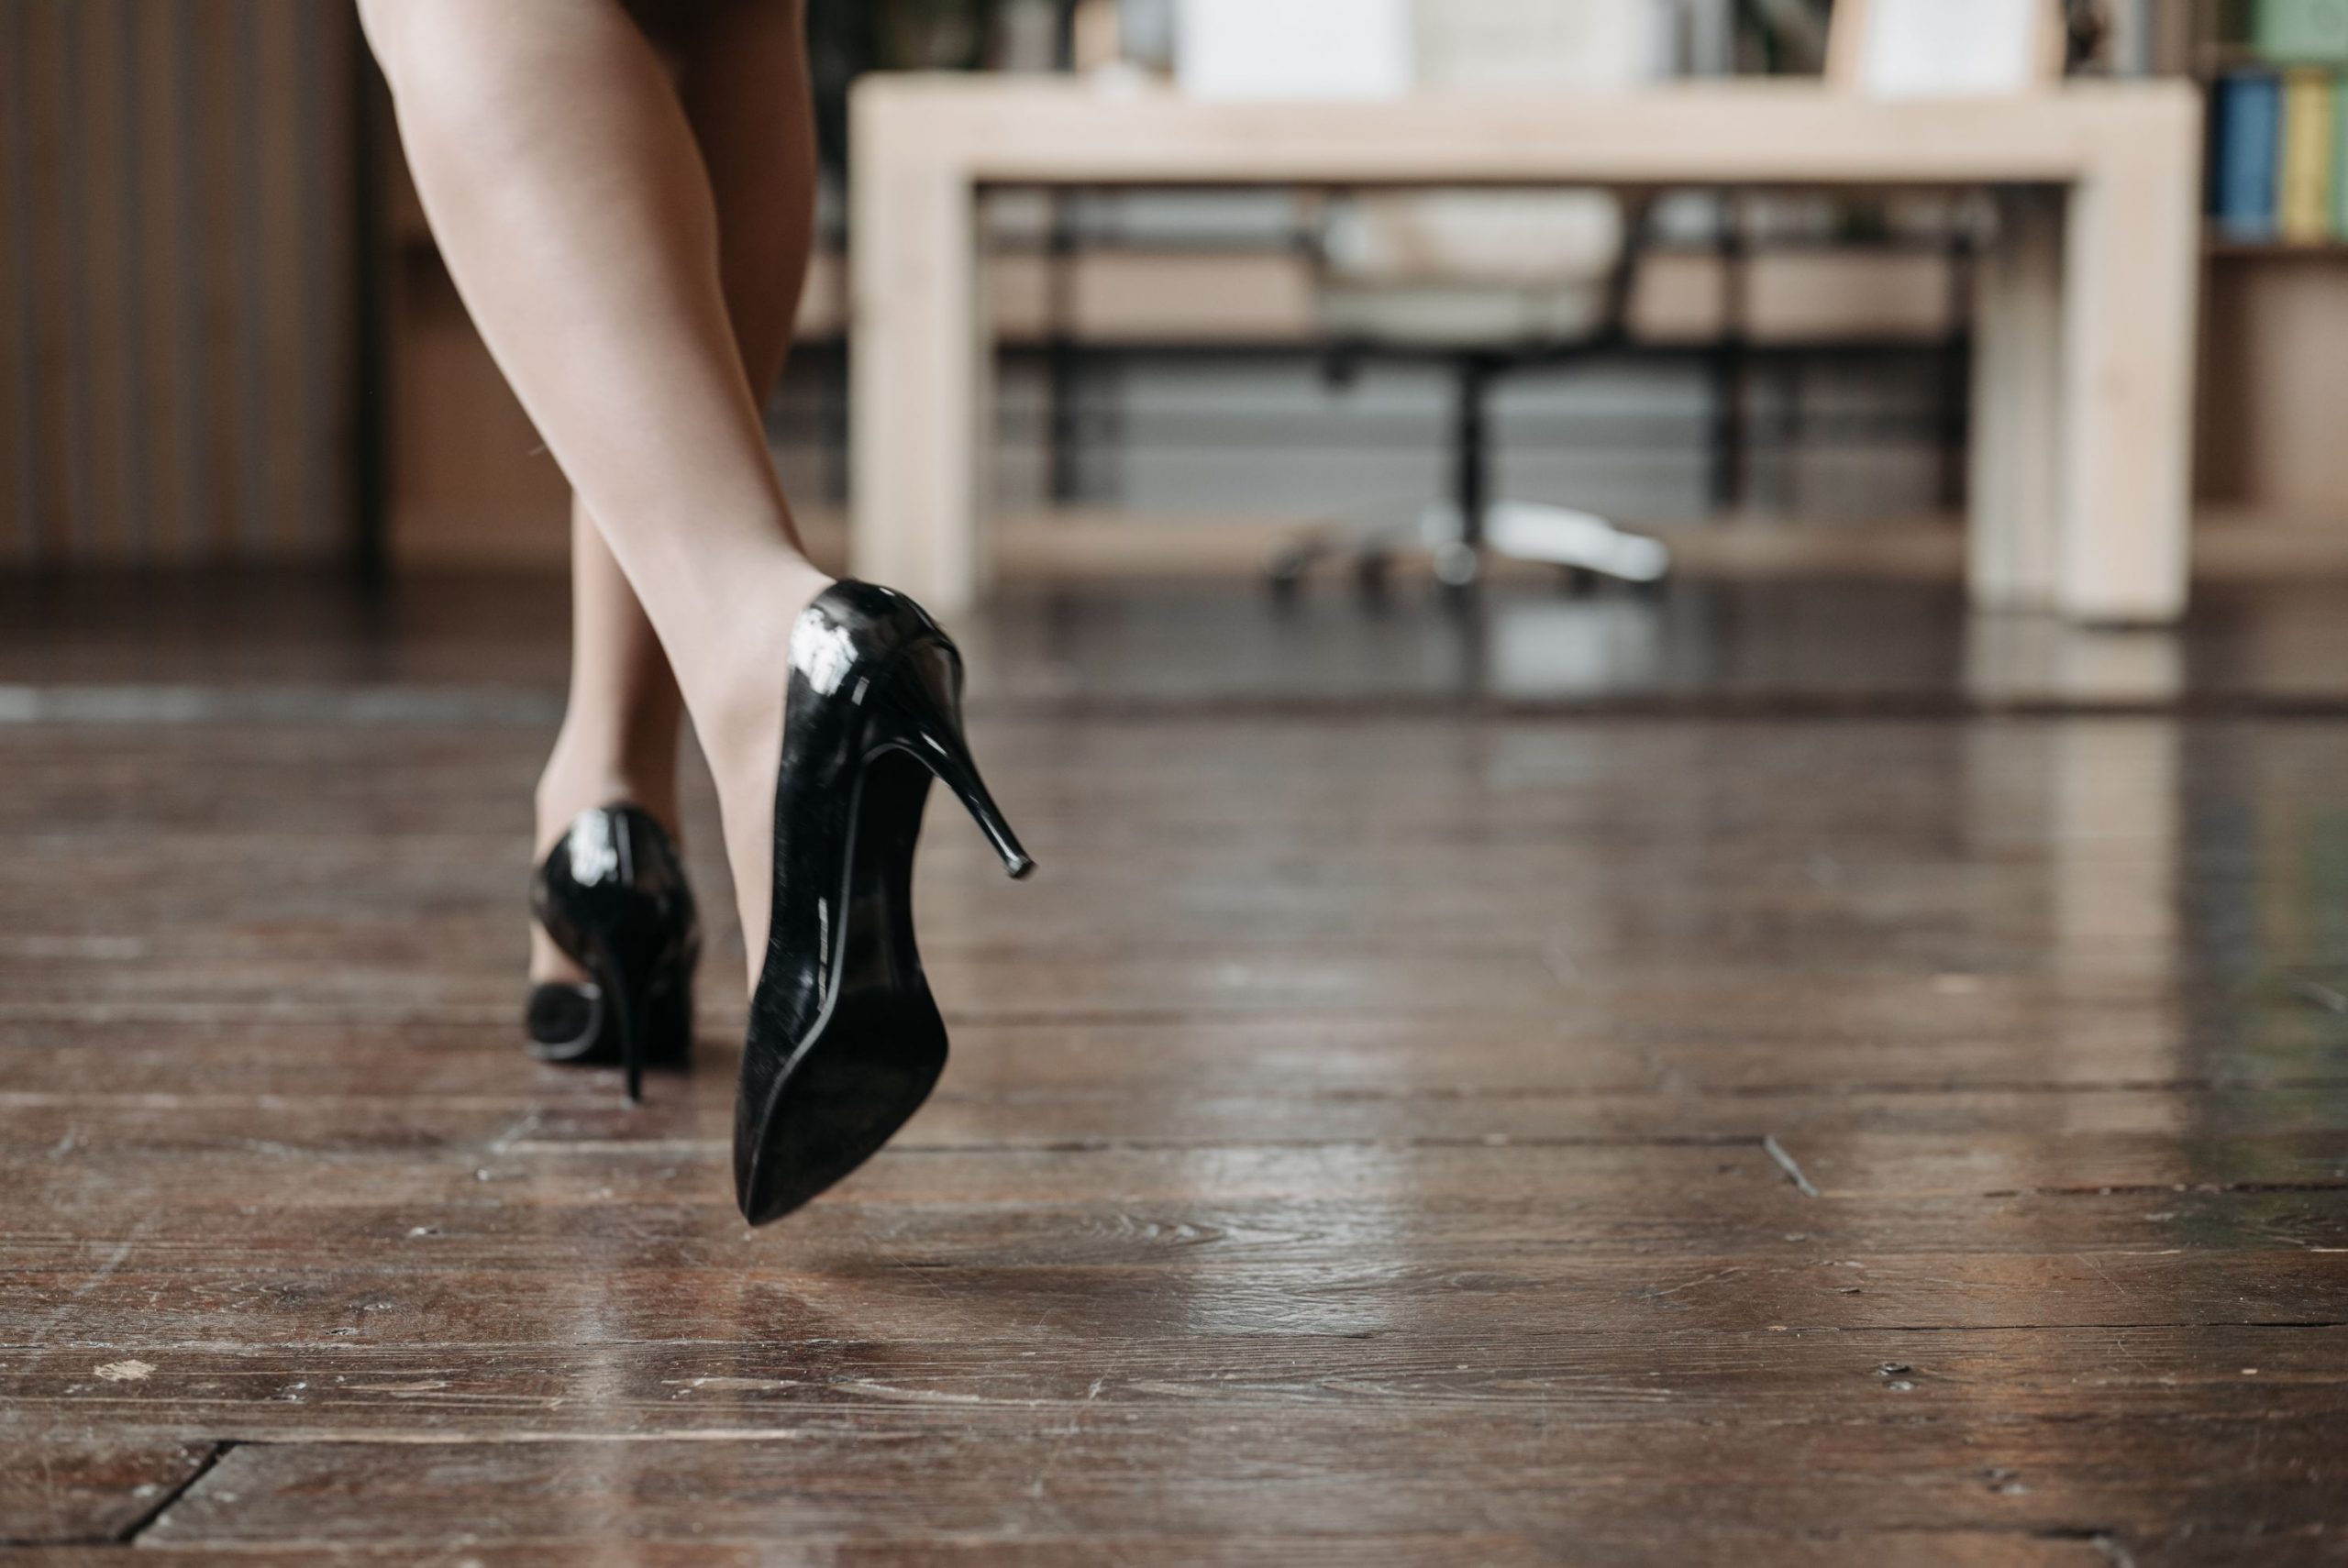 Woman walking away wearing heels